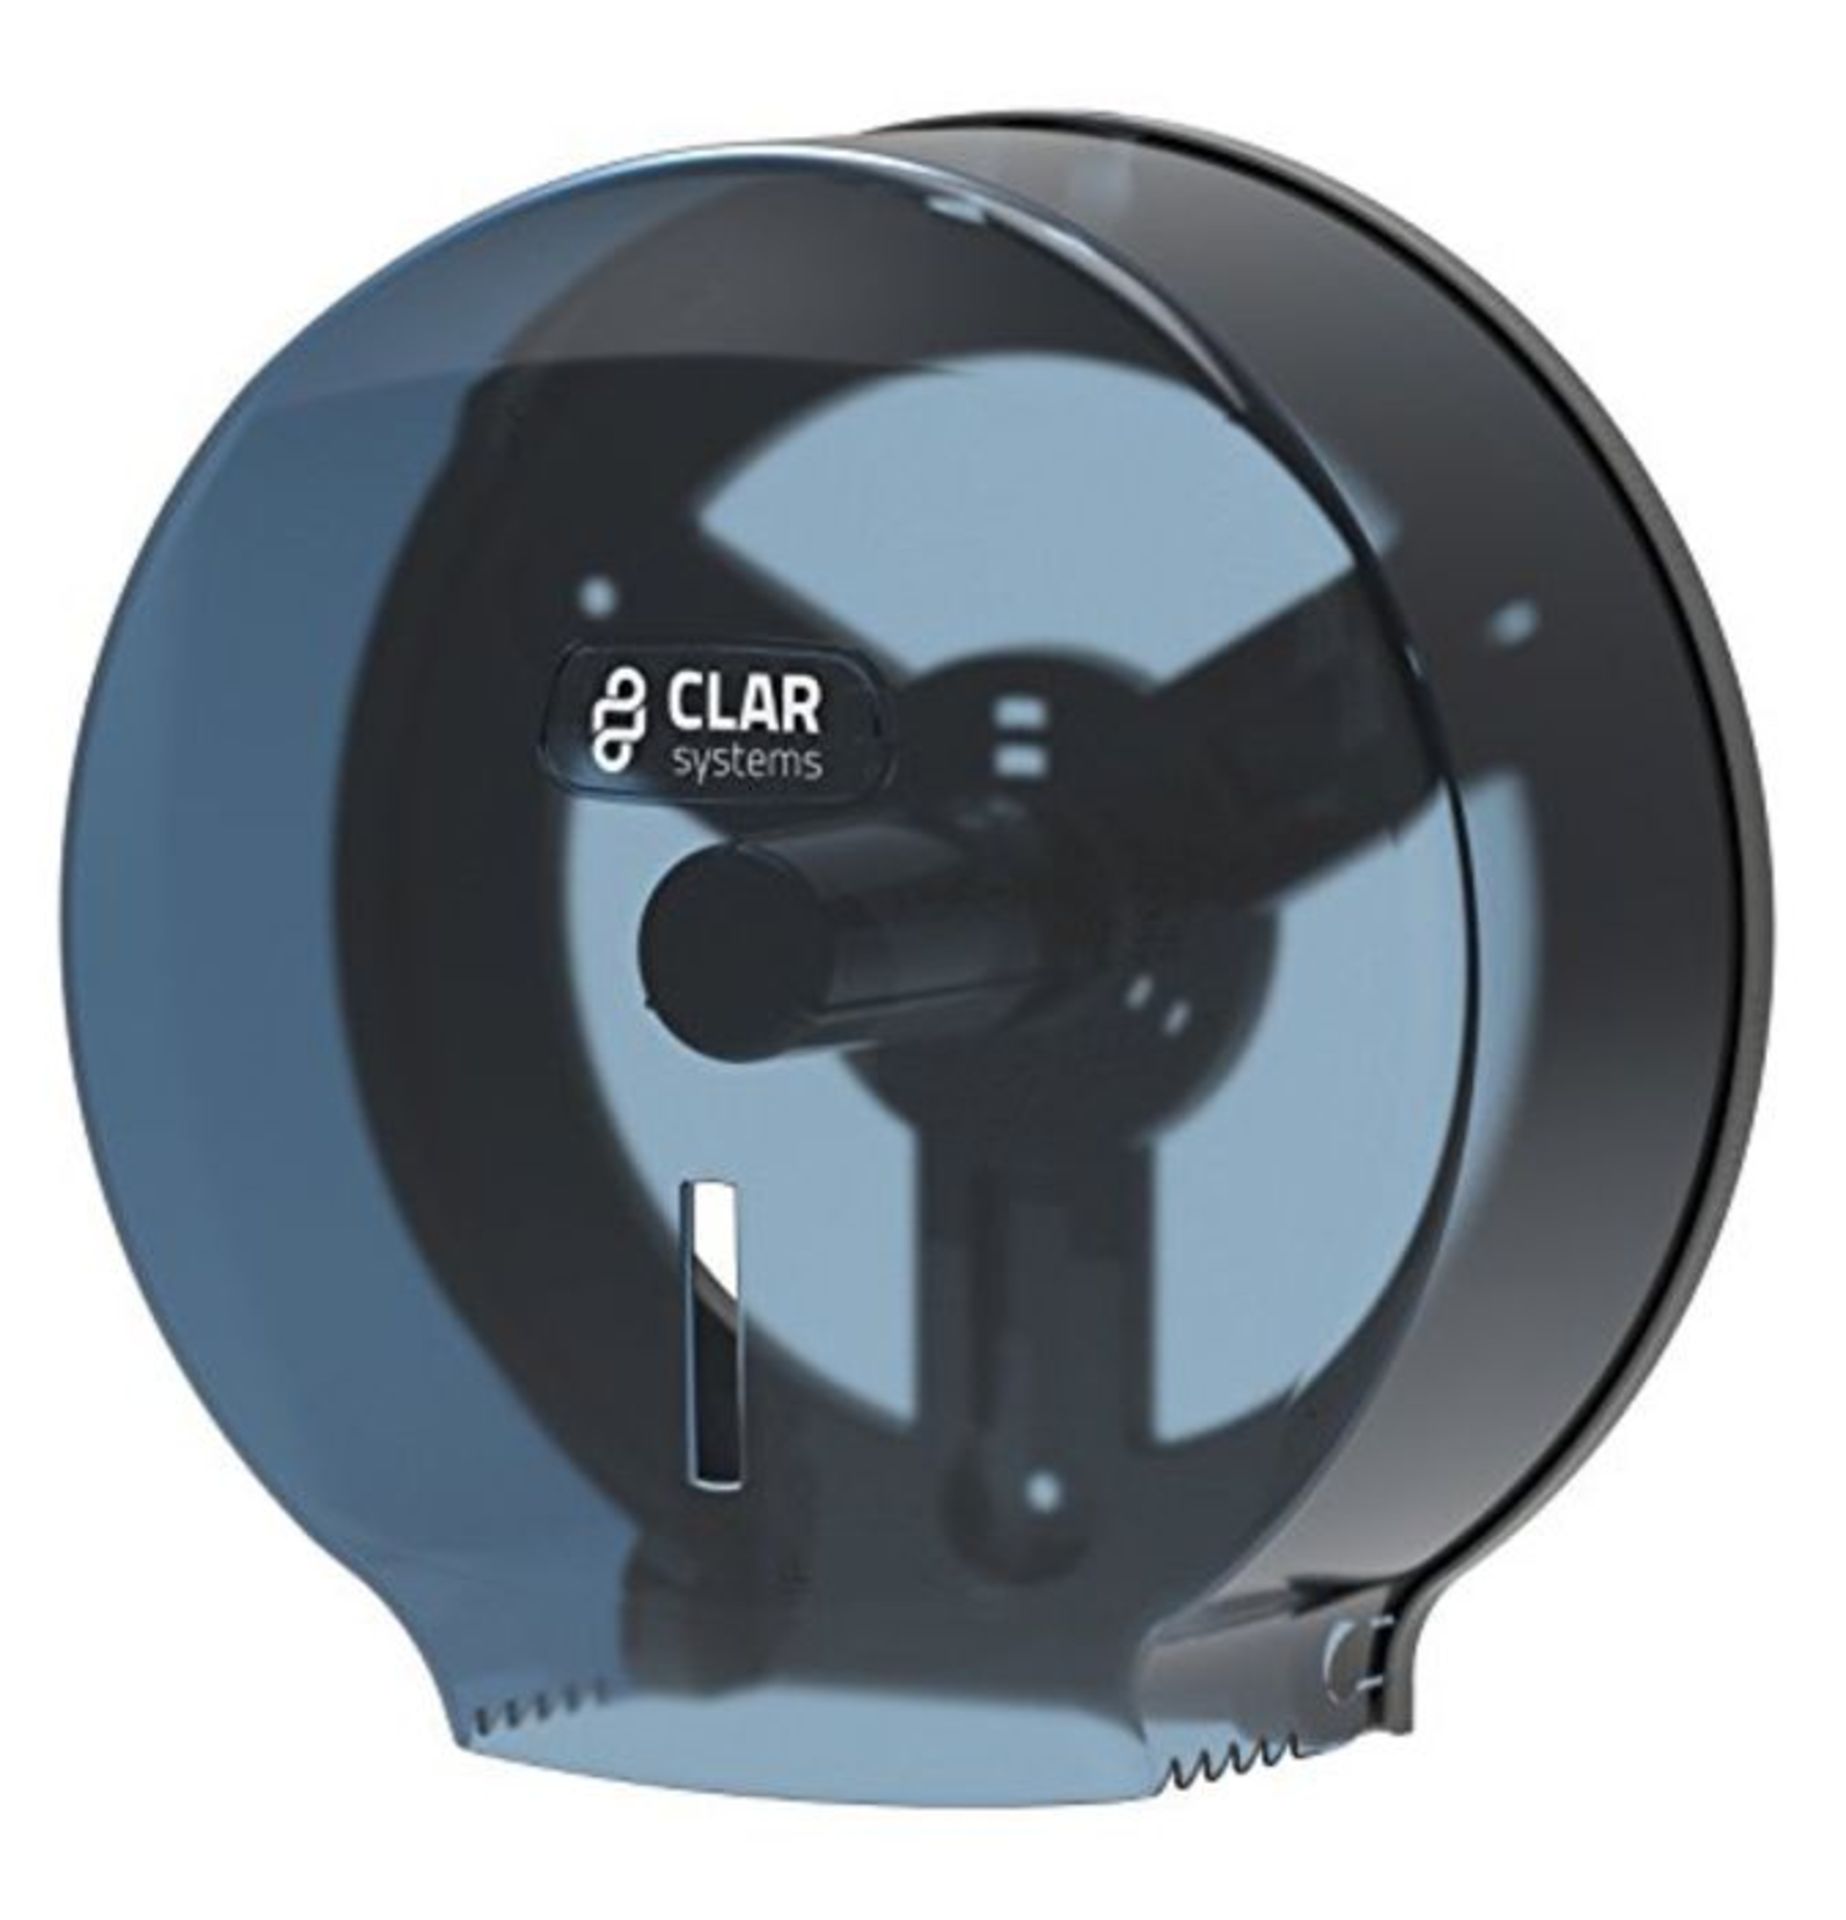 Clar Systems p3000pt i-nova Toilet Paper Dispenser in Roll, 300 m, fumé